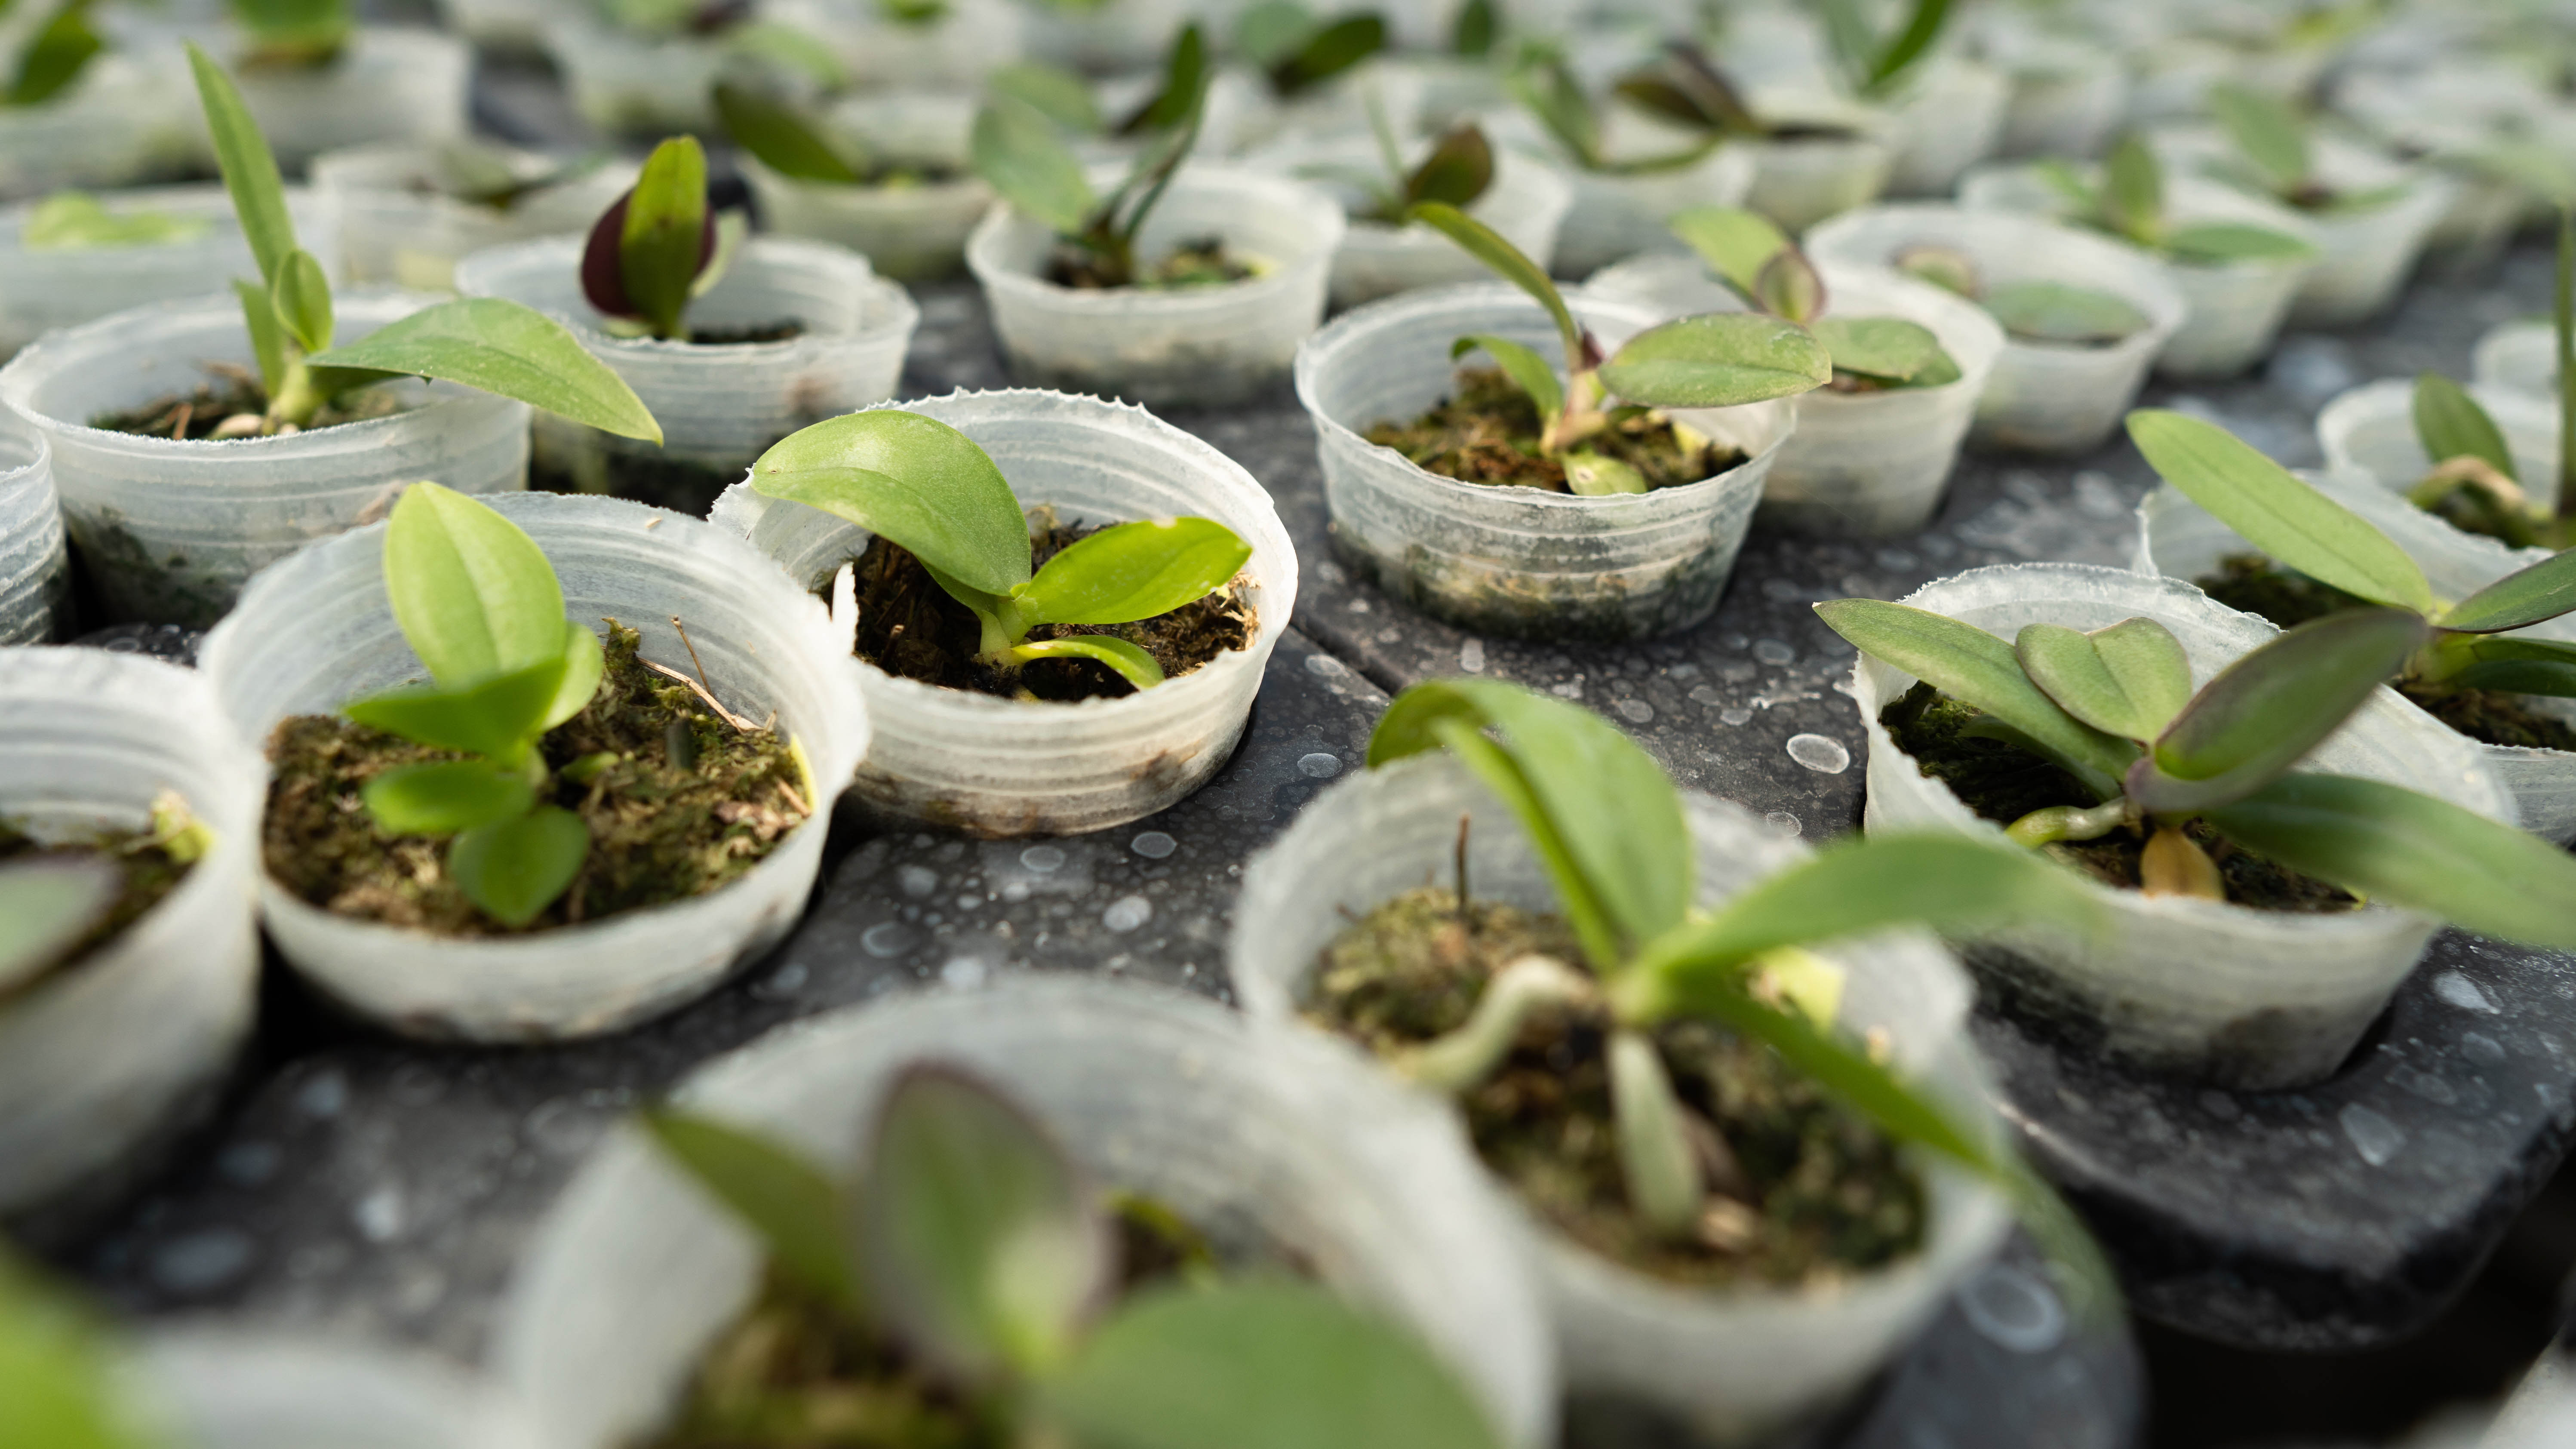 Orchid seedlings in plastic pots